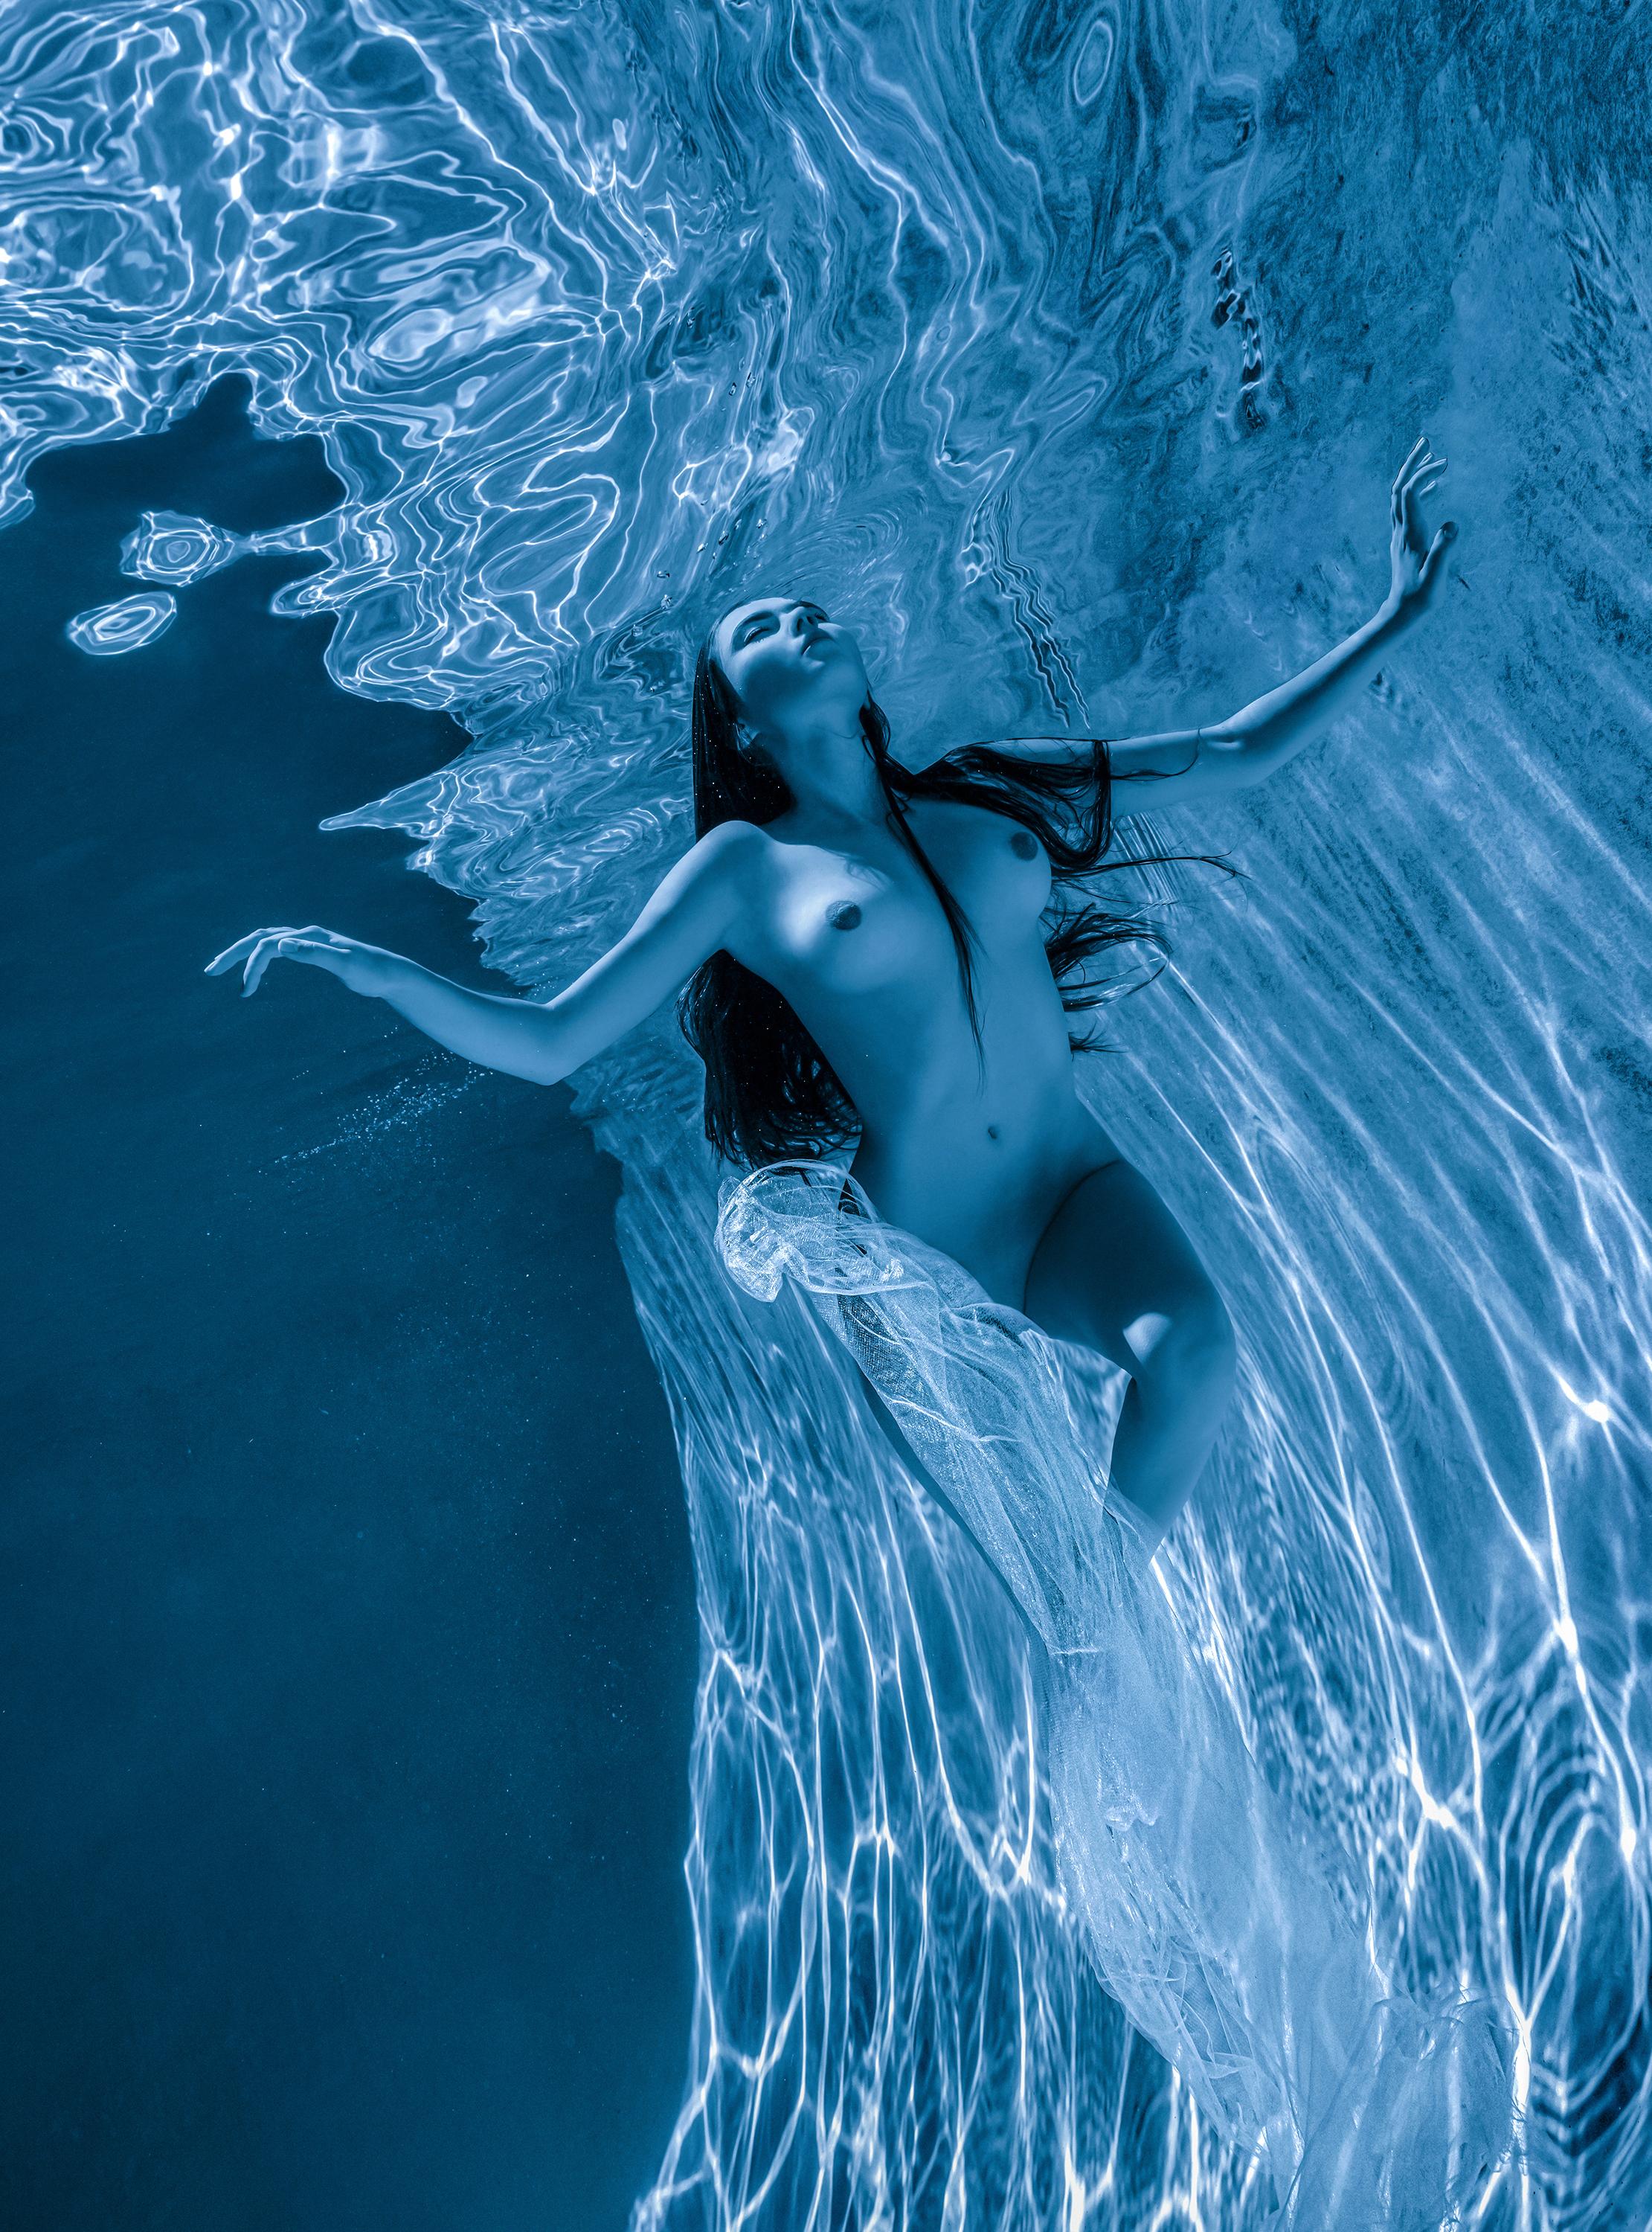 Alex Sher Nude Photograph - Freediver - underwater nude photograph - archival pigment print 35x26"